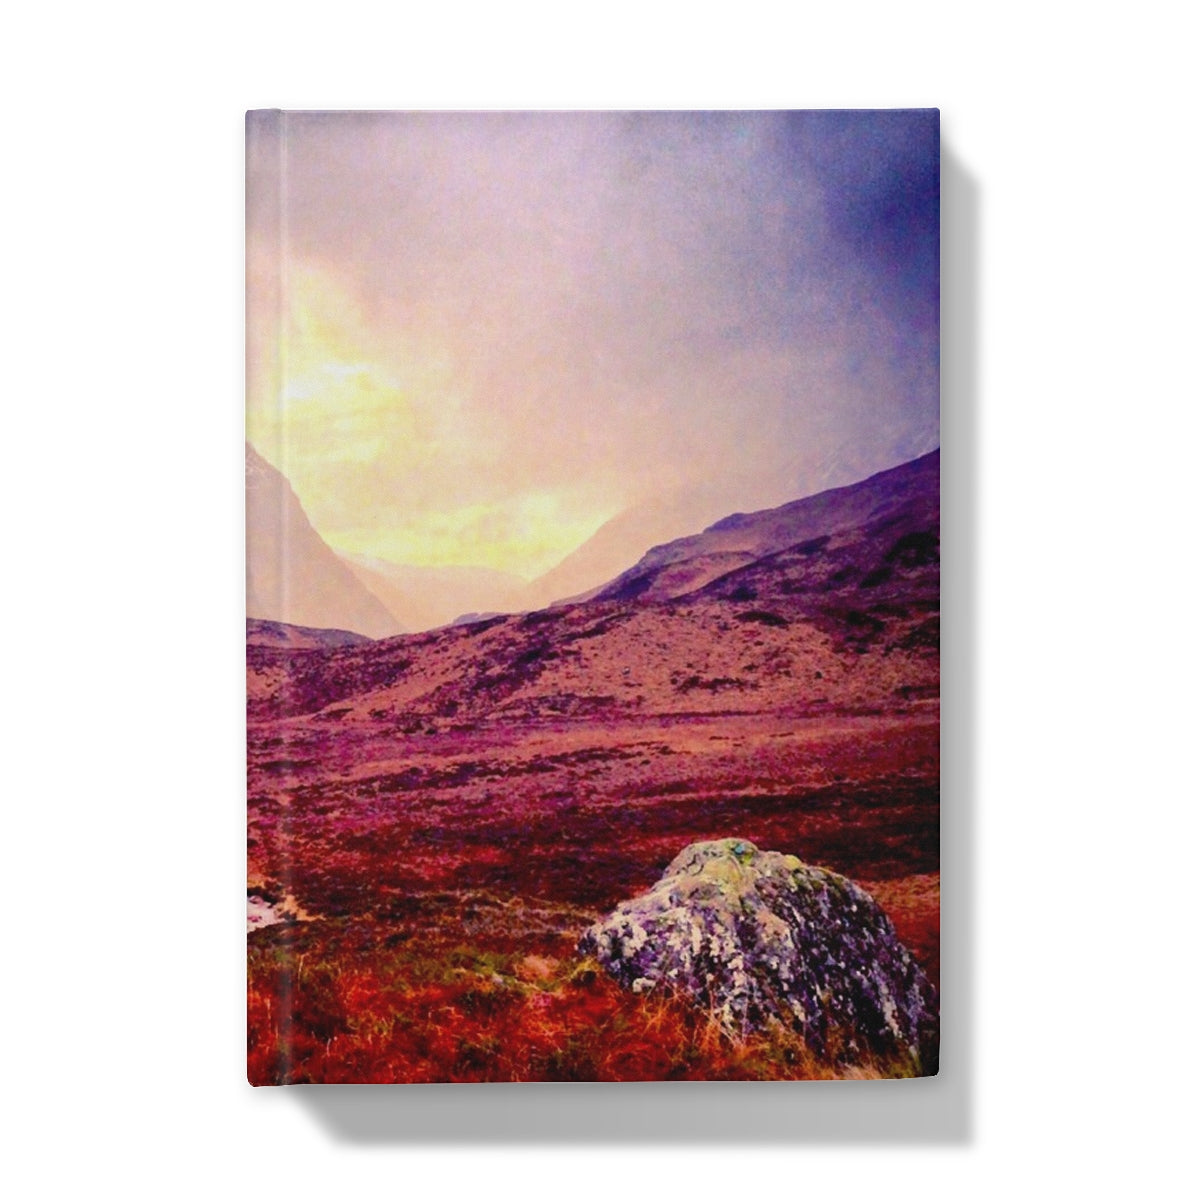 A Brooding Glencoe Art Gifts Hardback Journal-Journals & Notebooks-Glencoe Art Gallery-5"x7"-Plain-Paintings, Prints, Homeware, Art Gifts From Scotland By Scottish Artist Kevin Hunter